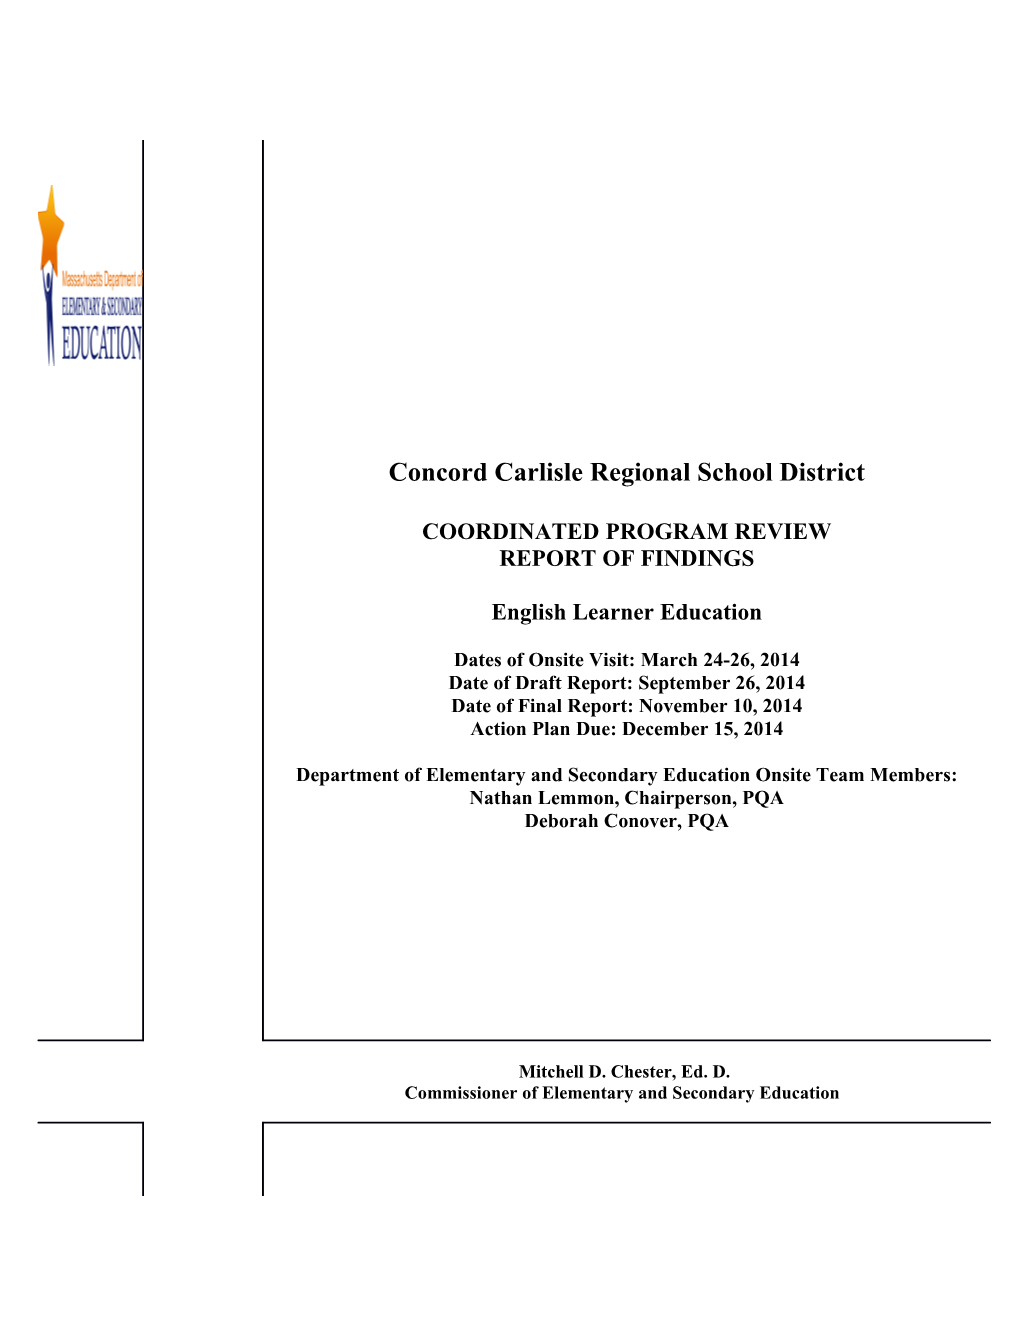 Concord Carlisle Regional School District CPR Final Report 2013-14